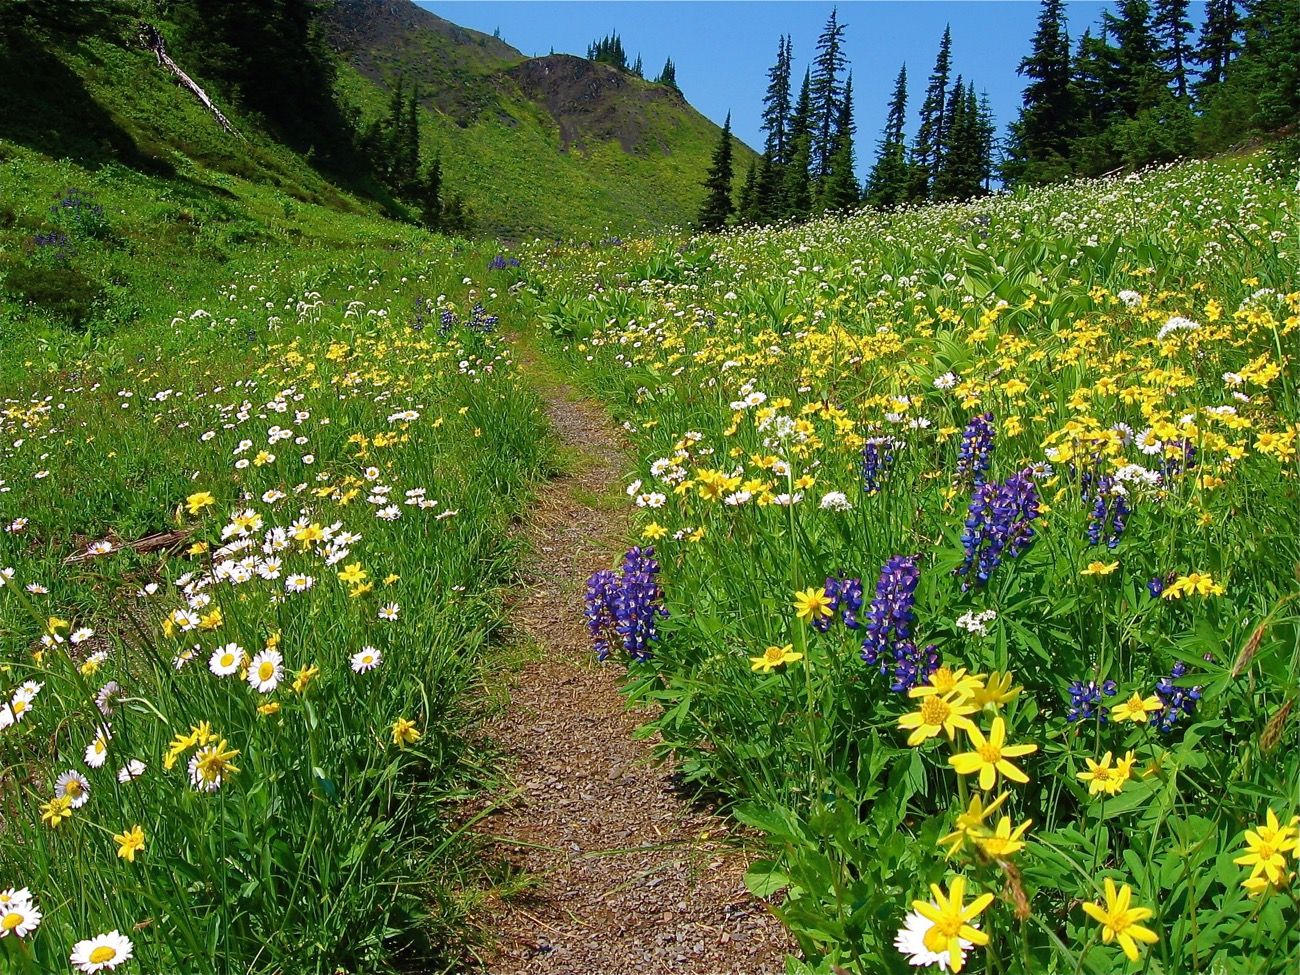 A trail through a beautiful alpine meadow.